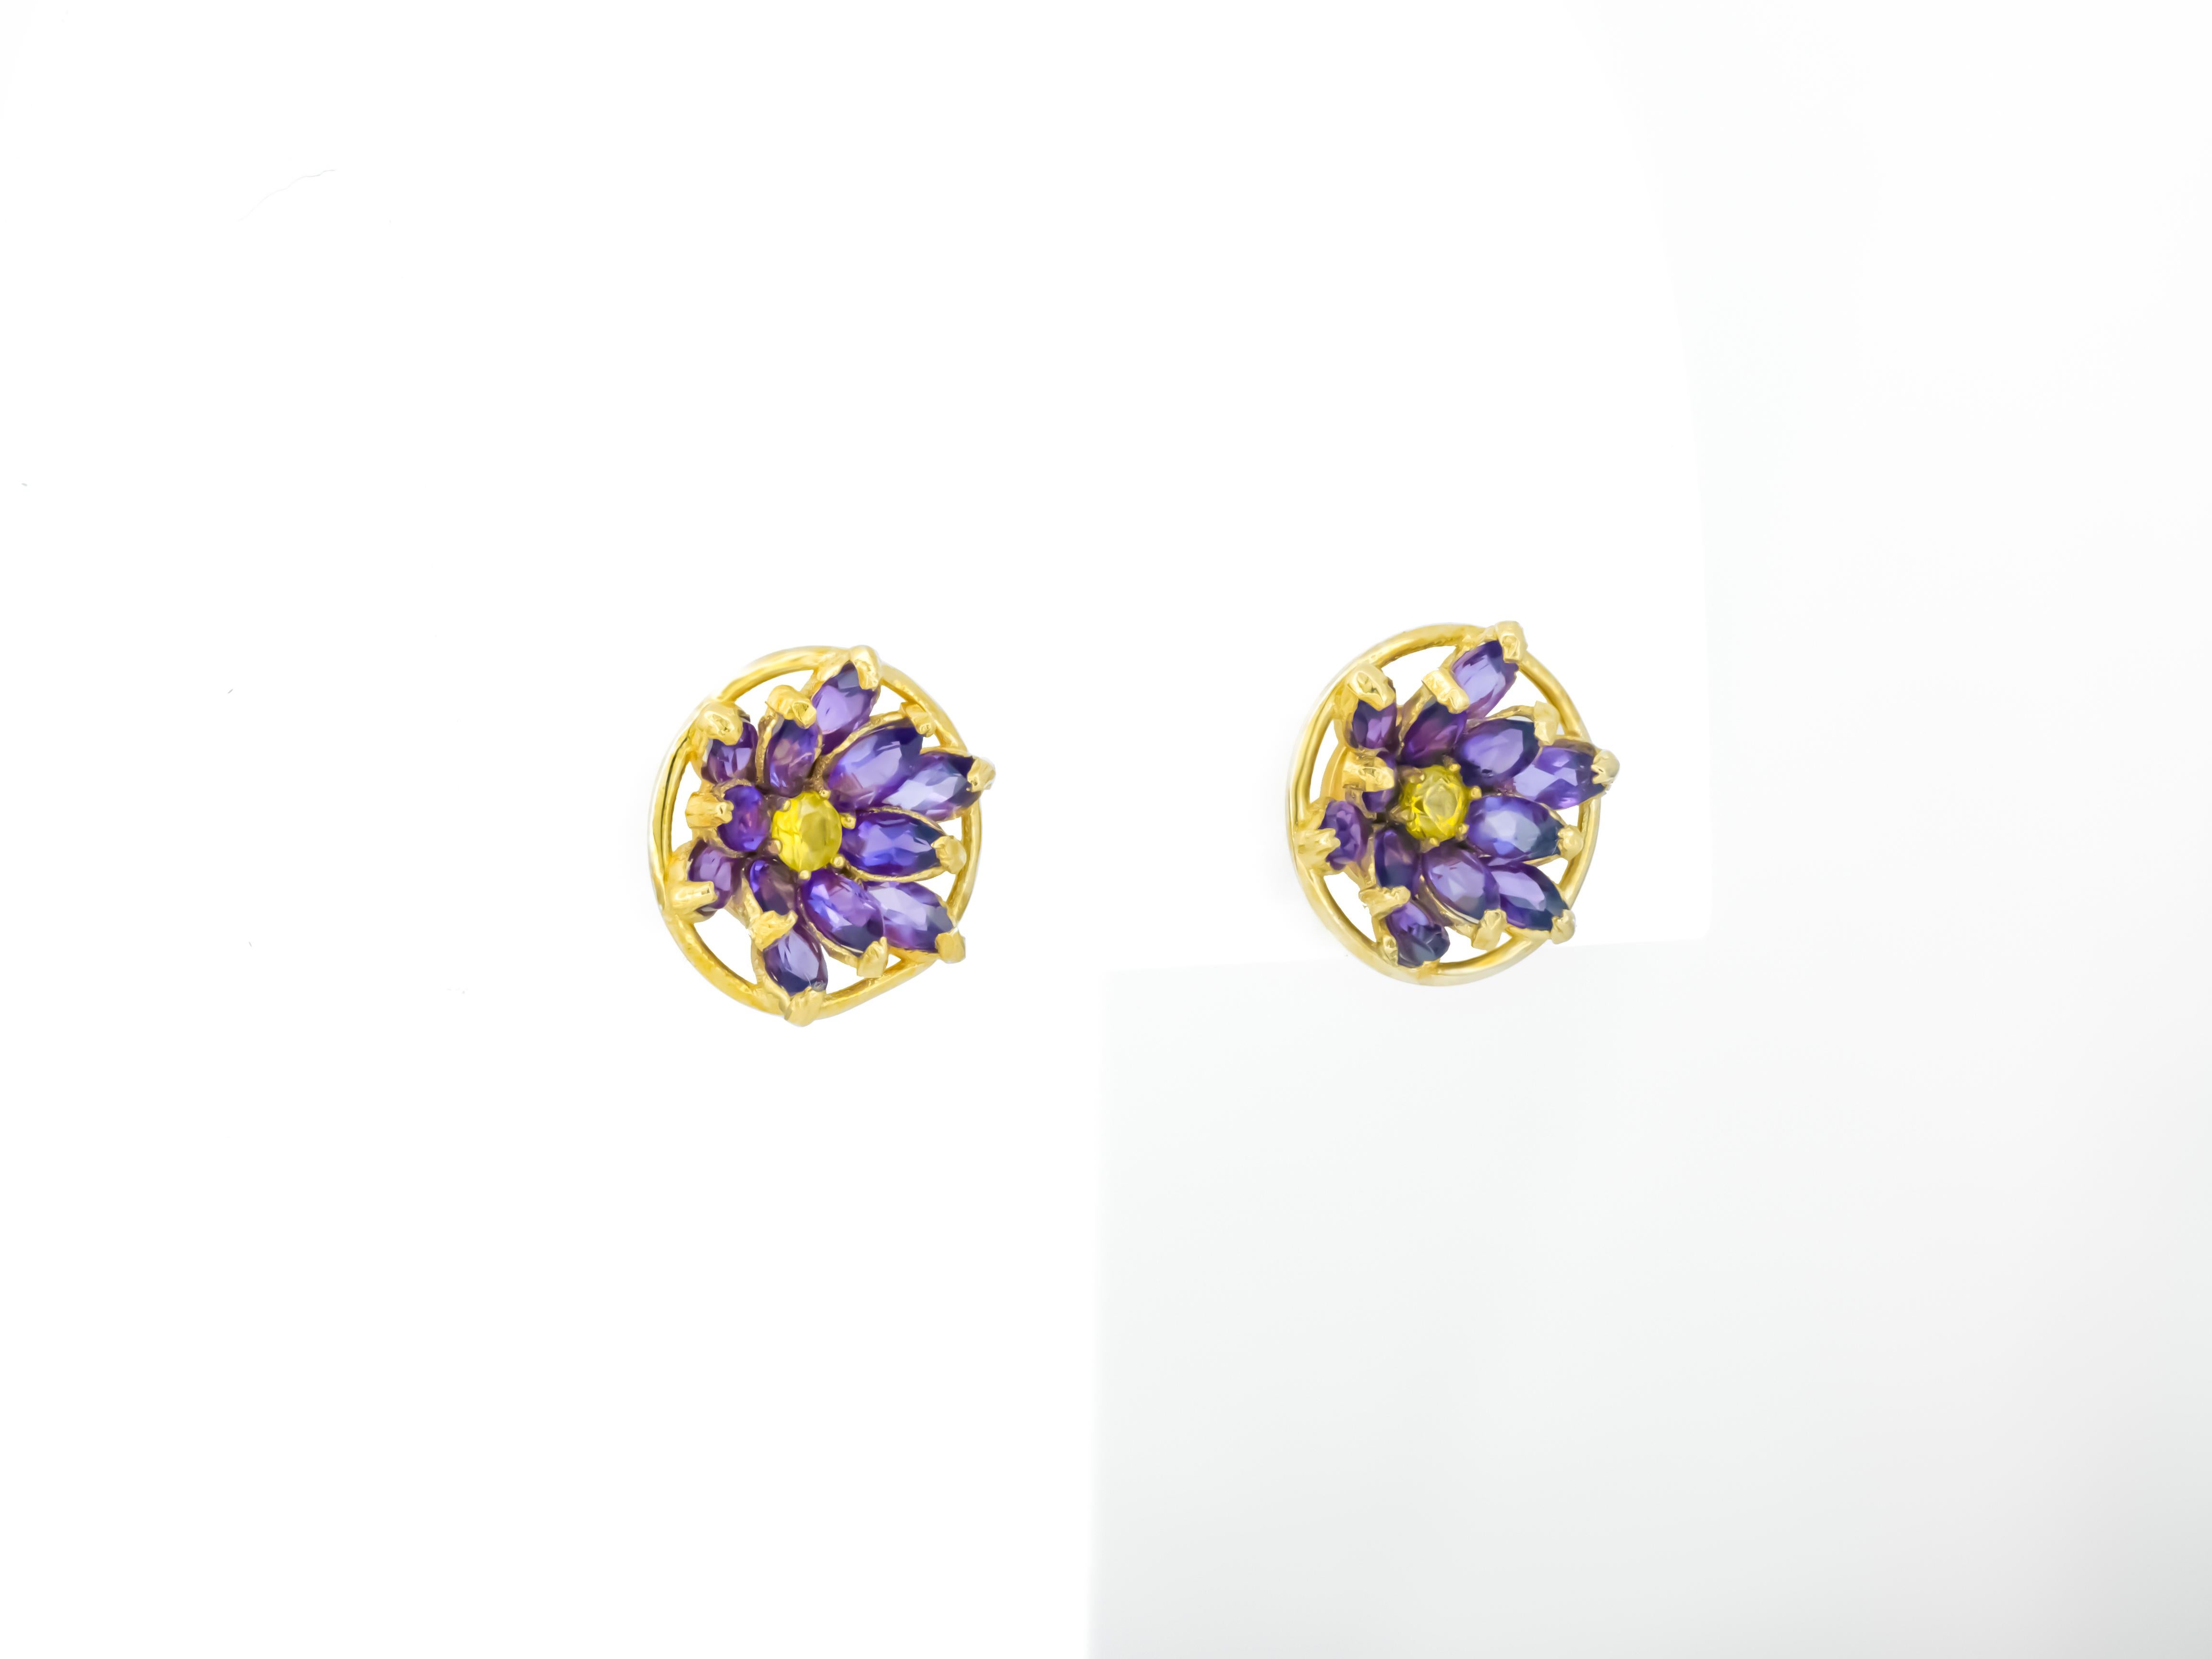 Lotus Flower Earrings Studs in 14K Gold, Amethyst and Sapphires Earrings! For Sale 3